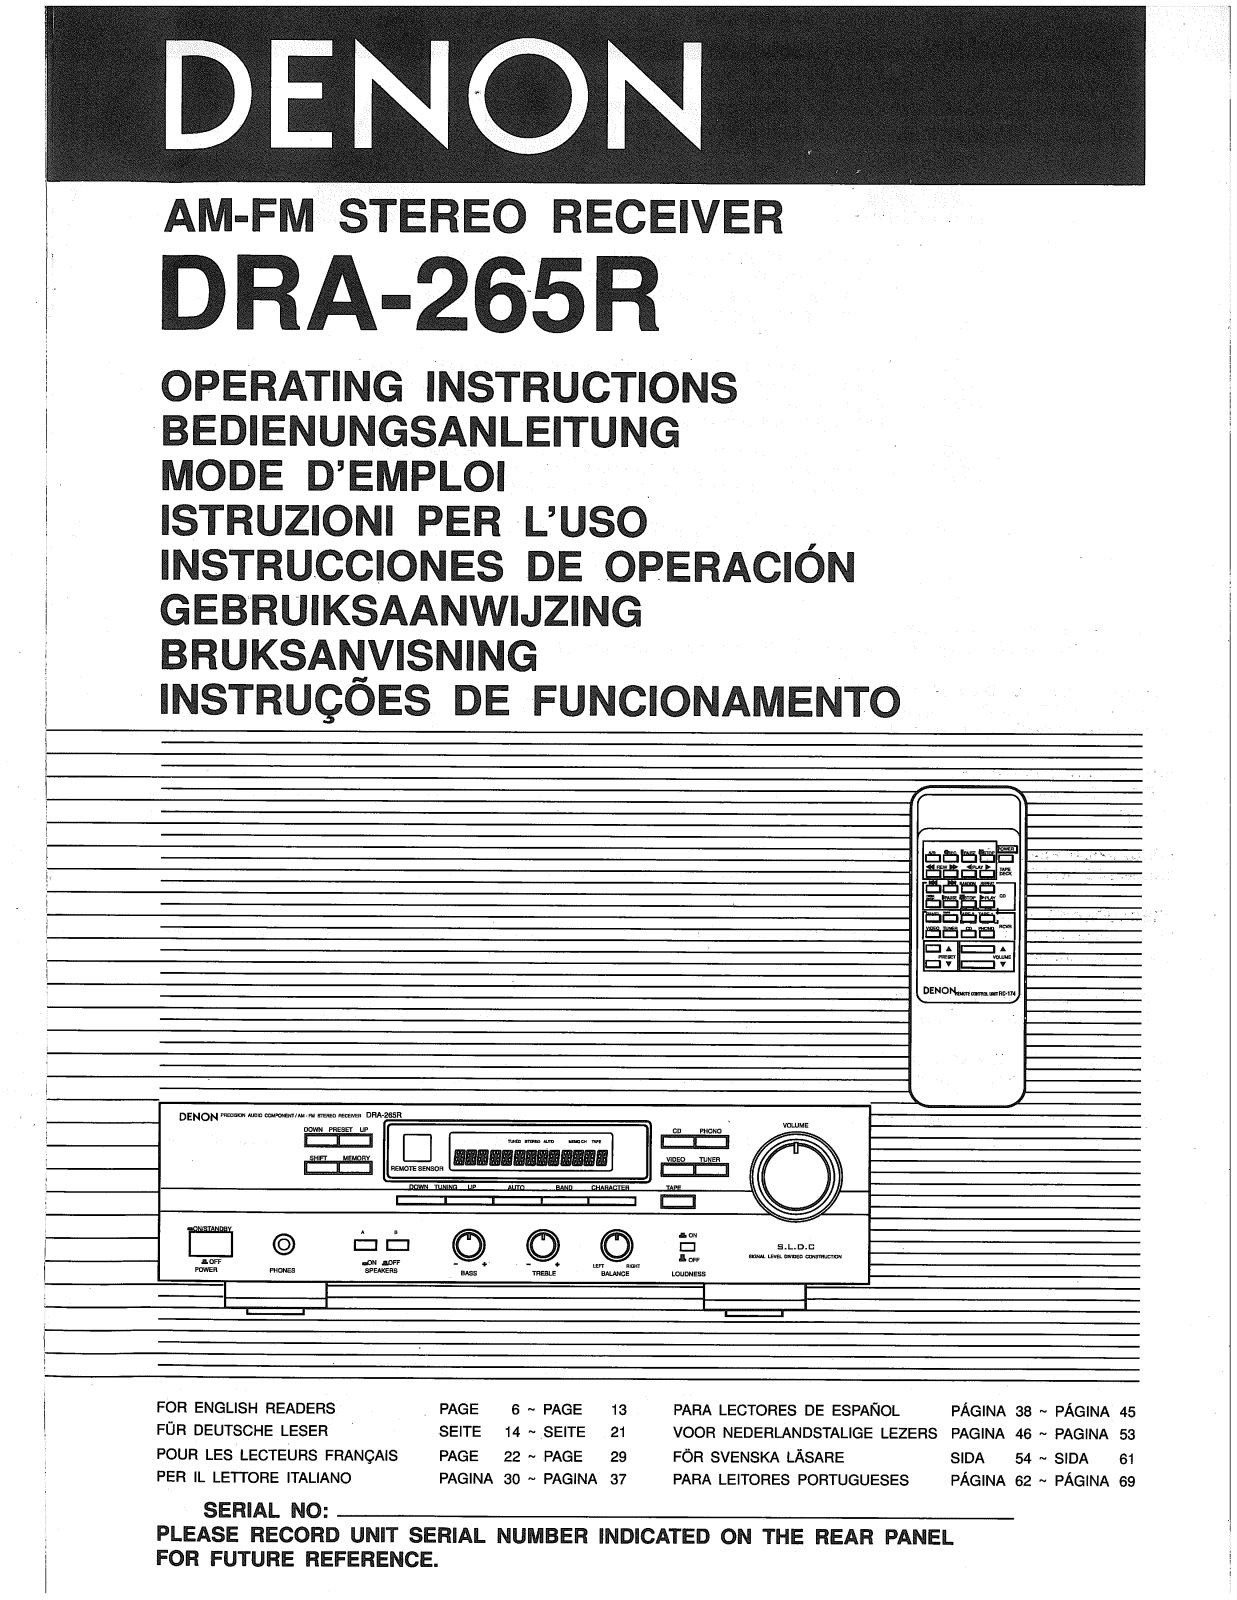 Denon DRA-265R Manual